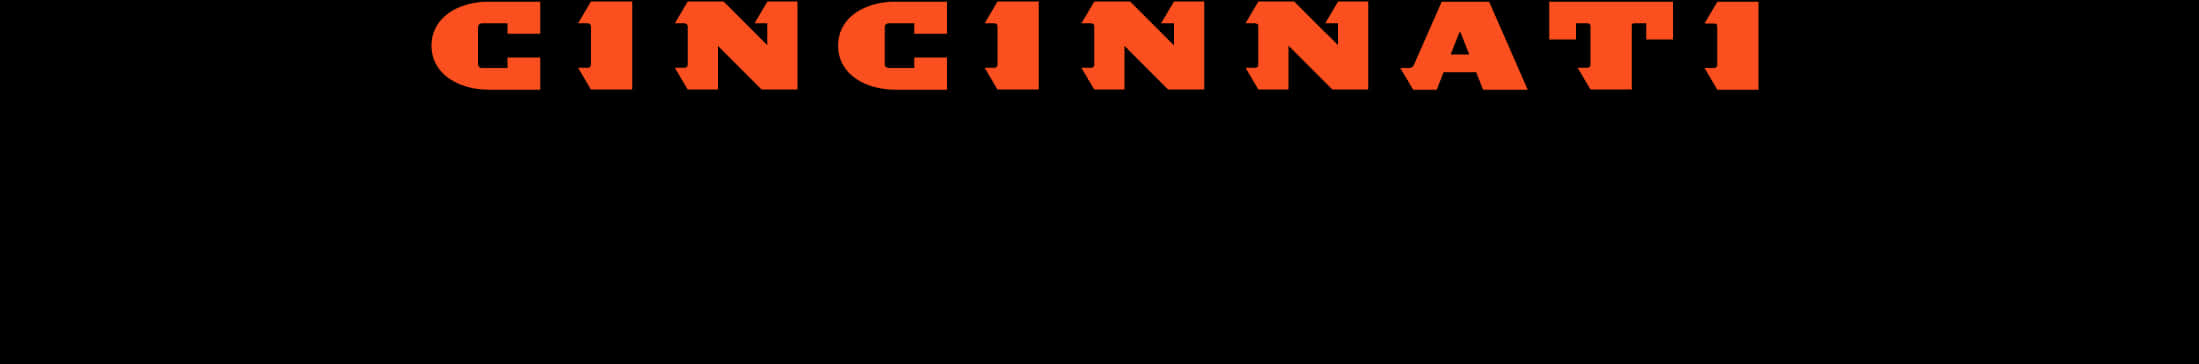 Cincinnati_ Text_ Logo_ Orange_ Black_ Background PNG image